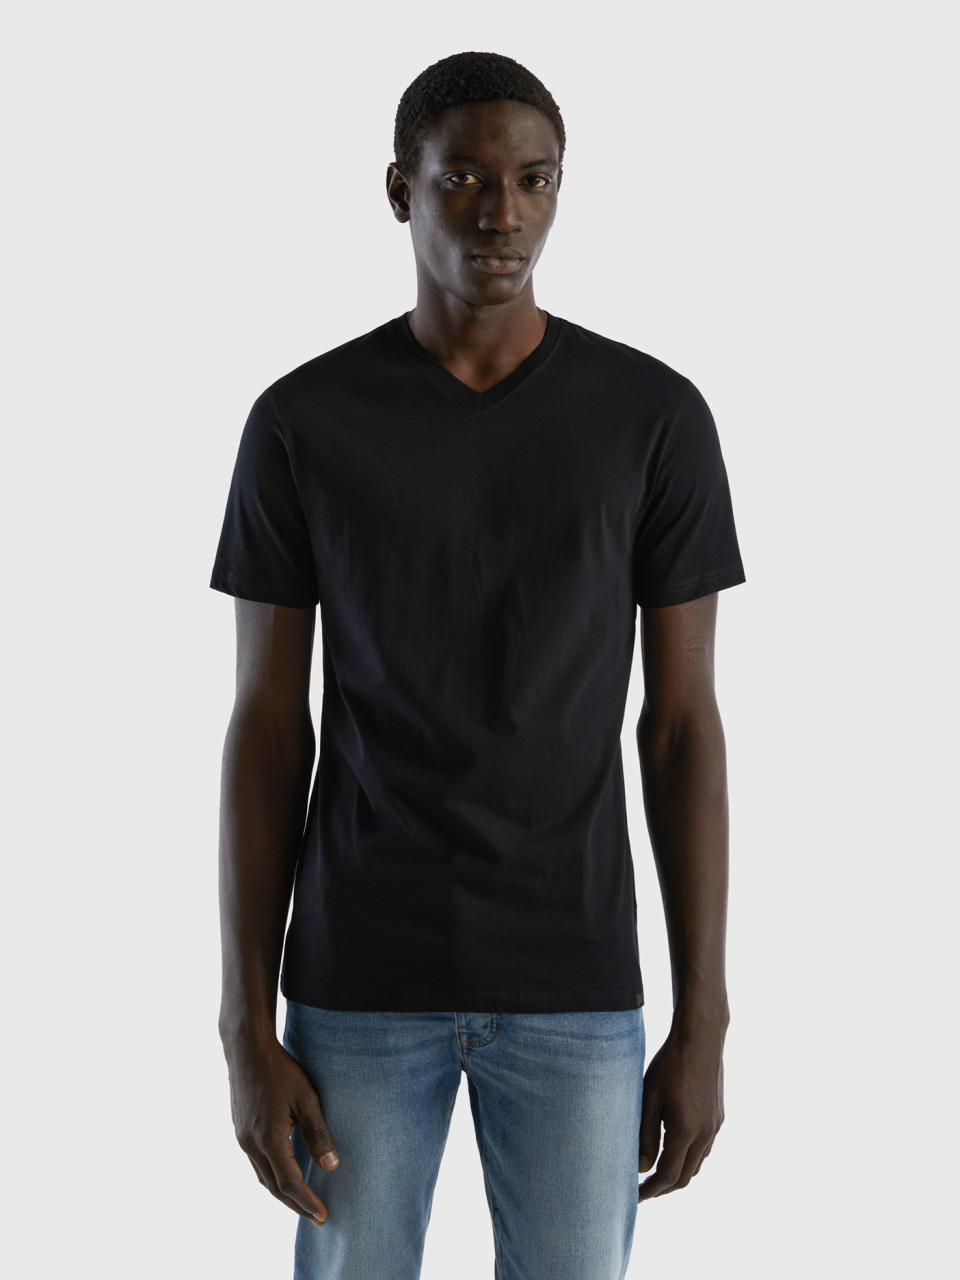 Benetton, T-shirt In Long Fiber Cotton, Black, Men